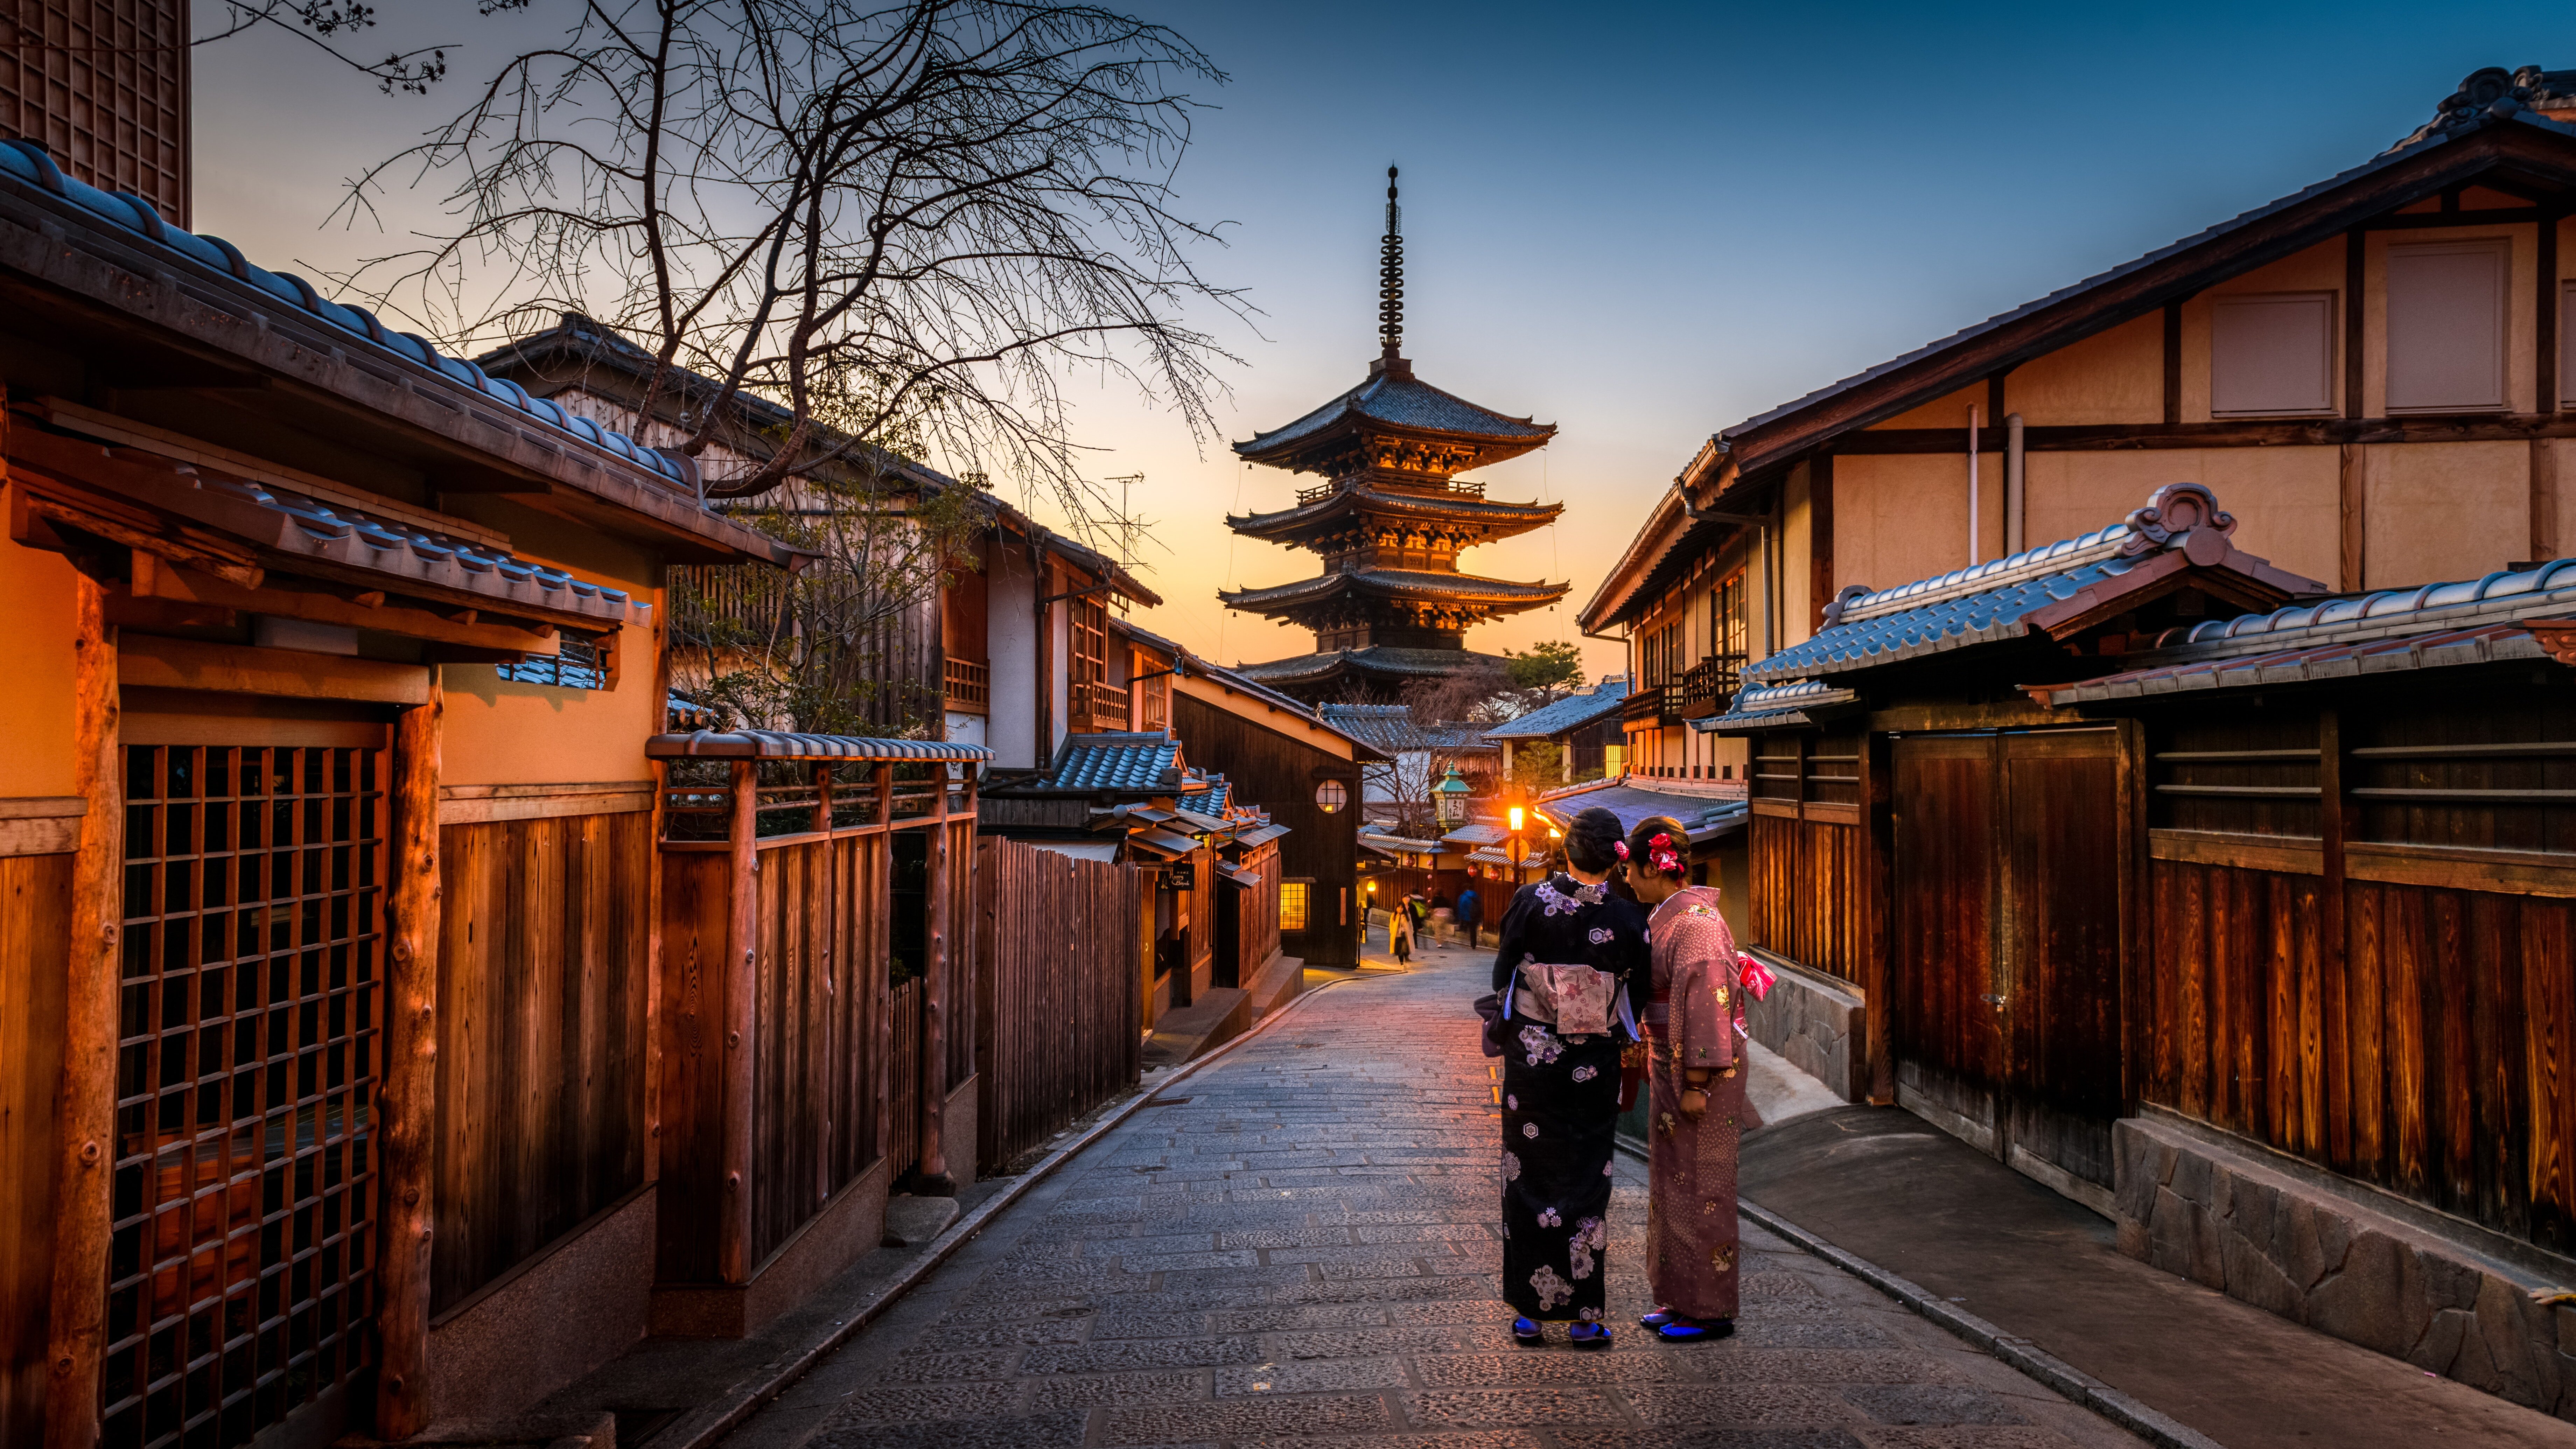 Достопримечательности Японии: гора Фудзияма, замок Химэдзи, Токийский Диснейленд и много-много храмов 